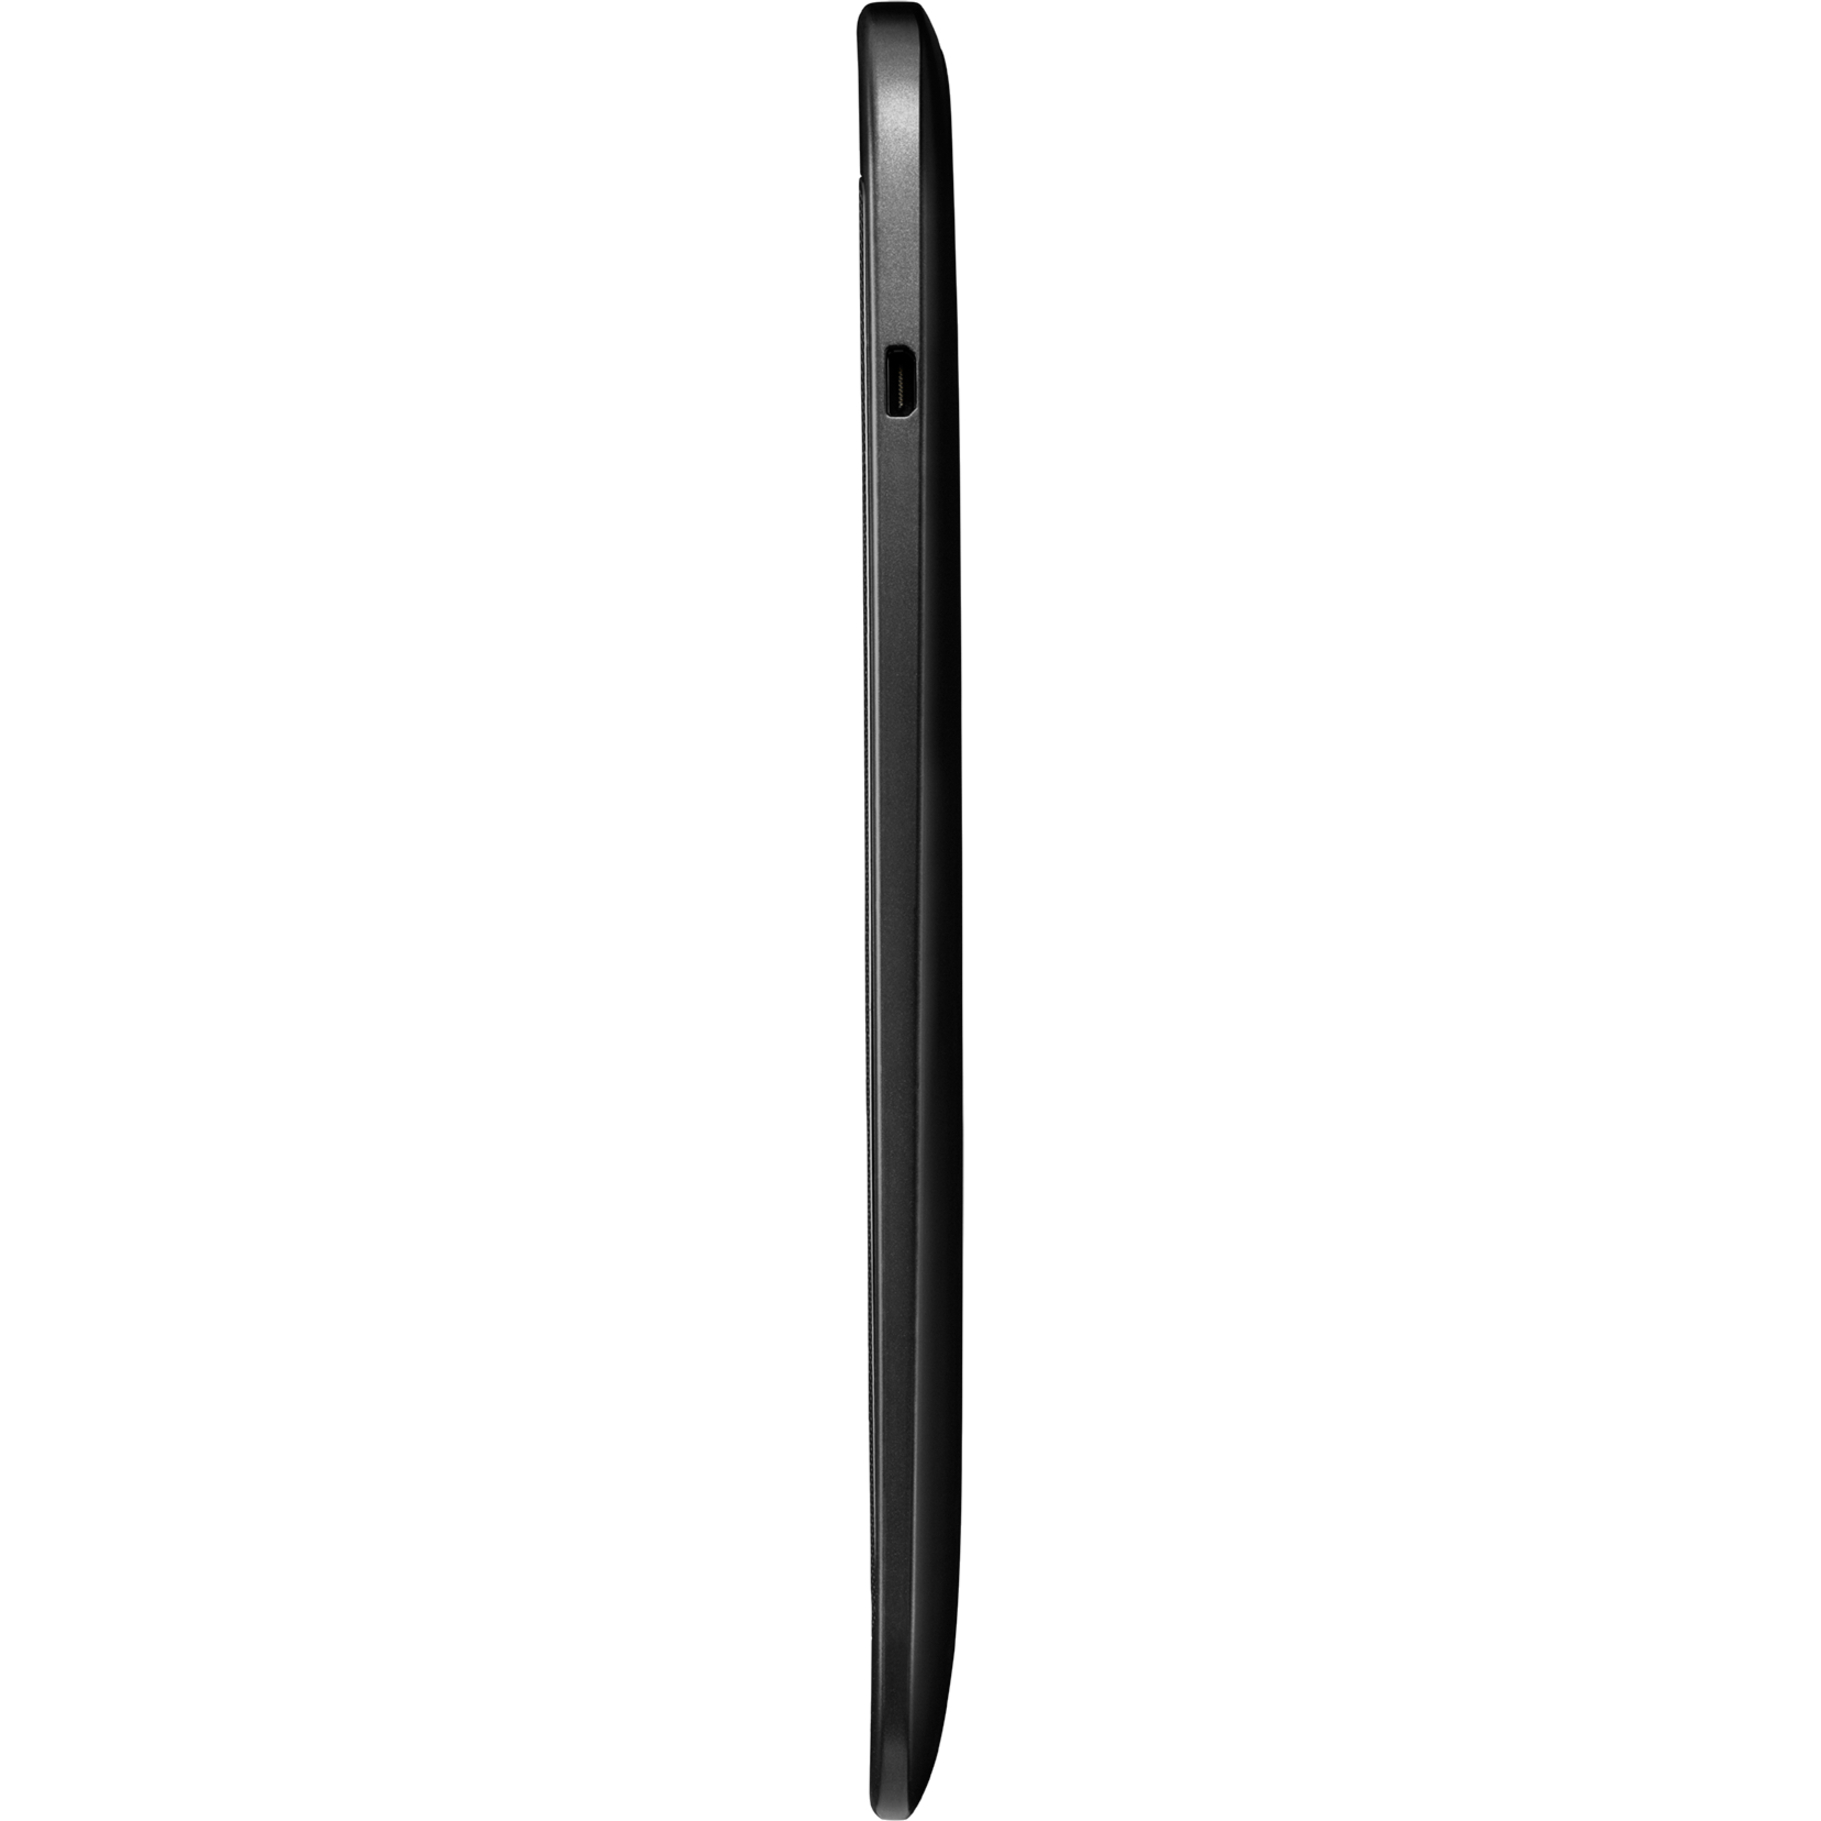 Samsung Nexus 10 GT-P8110HAVXAR Tablet, 10" WQXGA, 2 GB, 32 GB Storage, Android 4.2 Jelly Bean, Gray - image 3 of 6